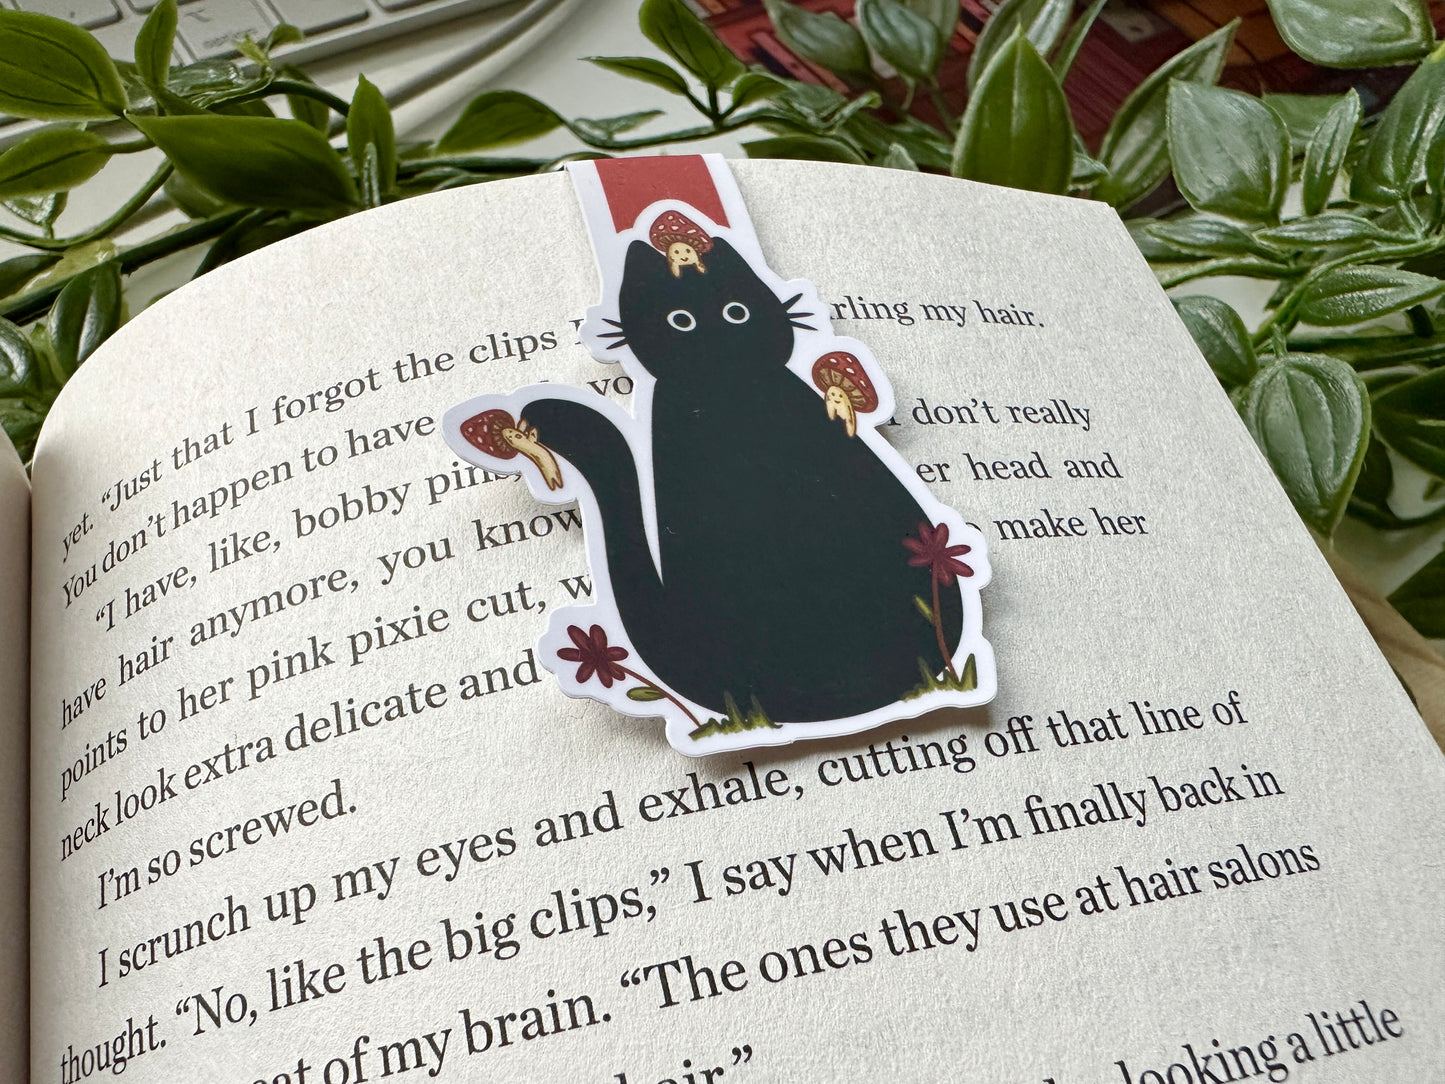 Black Cat with Mushrooms Magnetic Bookmark